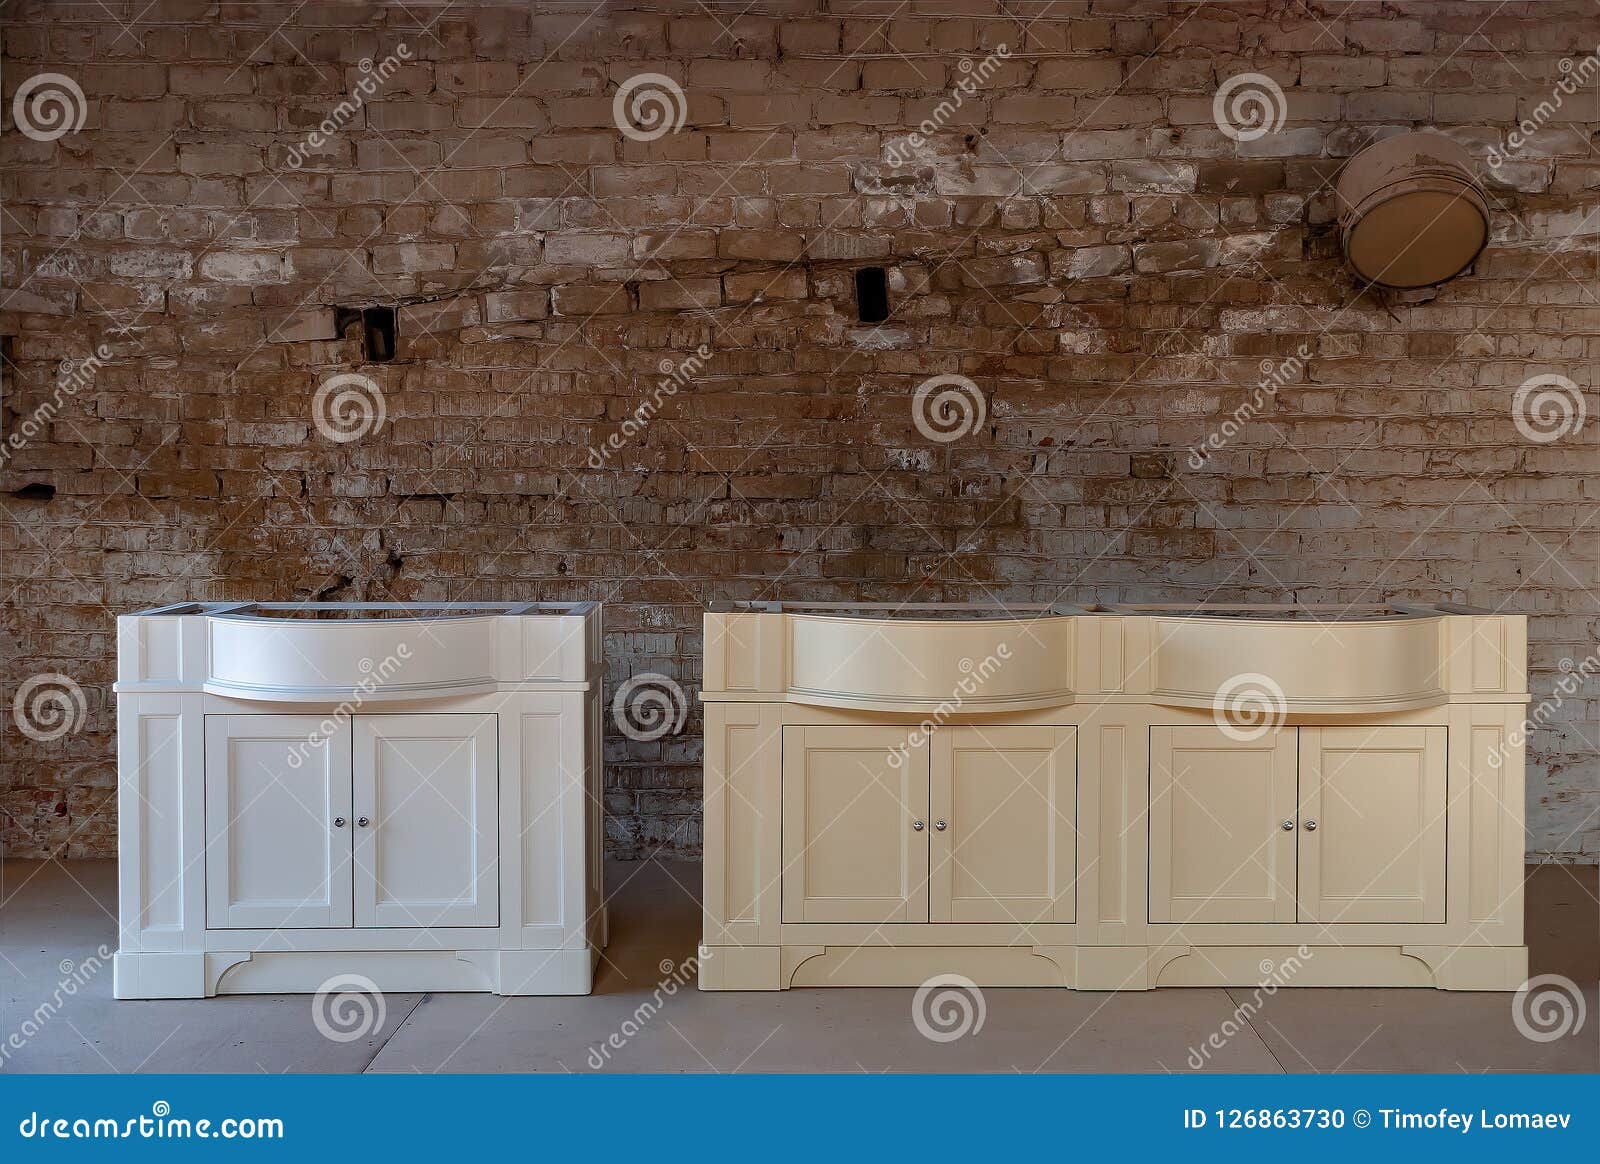 Bathroom Vanity Cabinets In Workshop Classic Furniture Stock